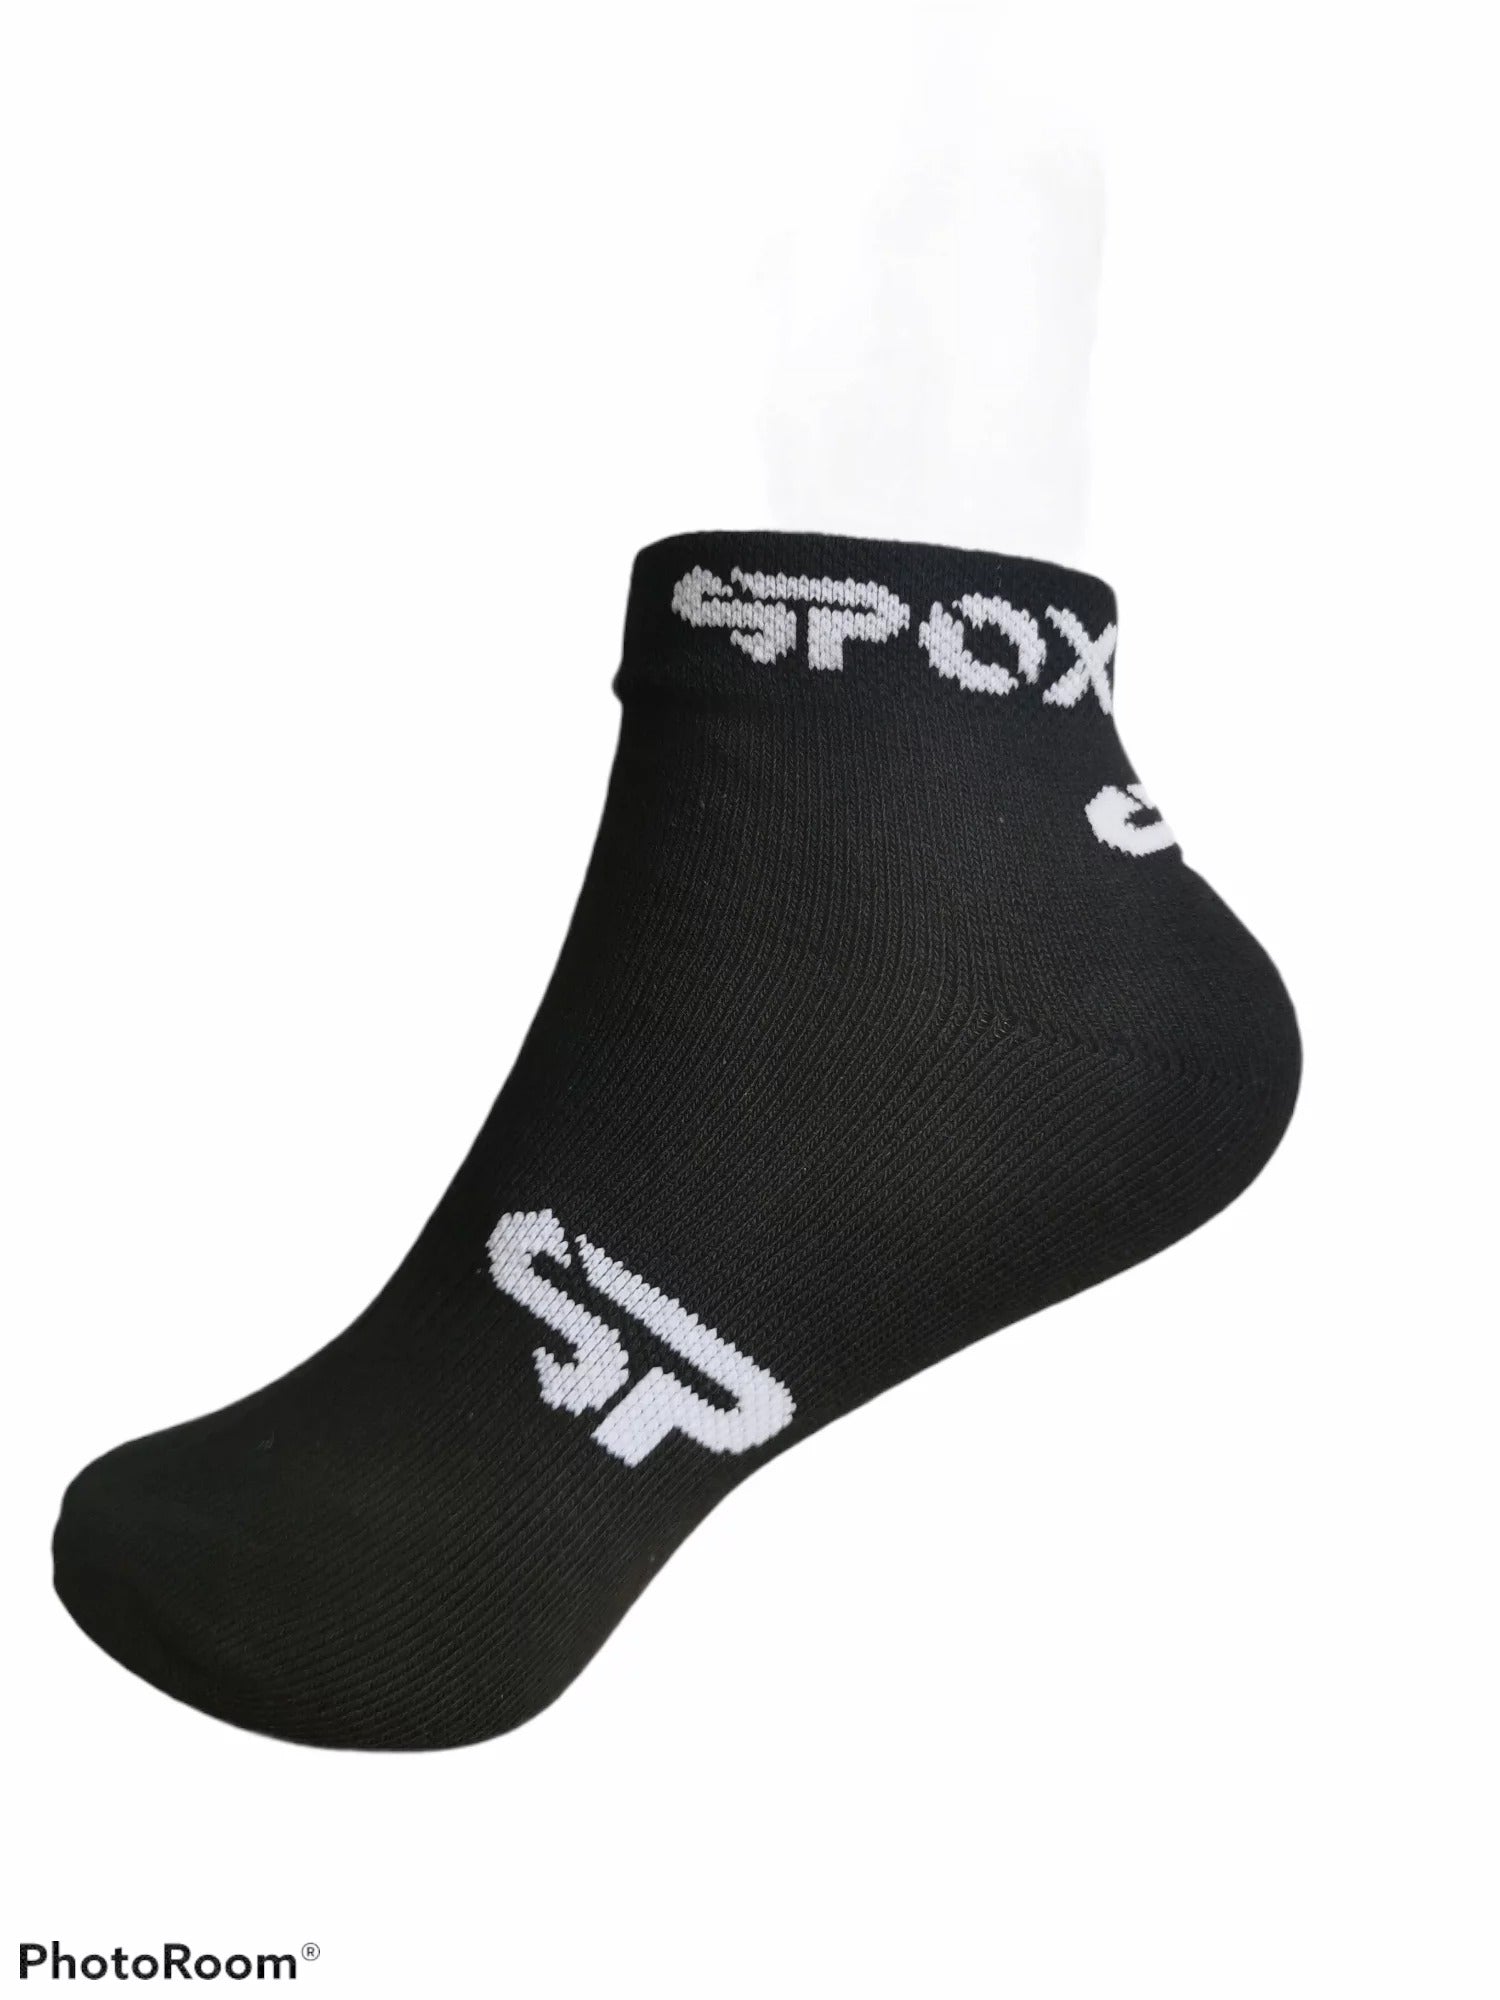 My Spox Comfort Ankle Socks (Black)